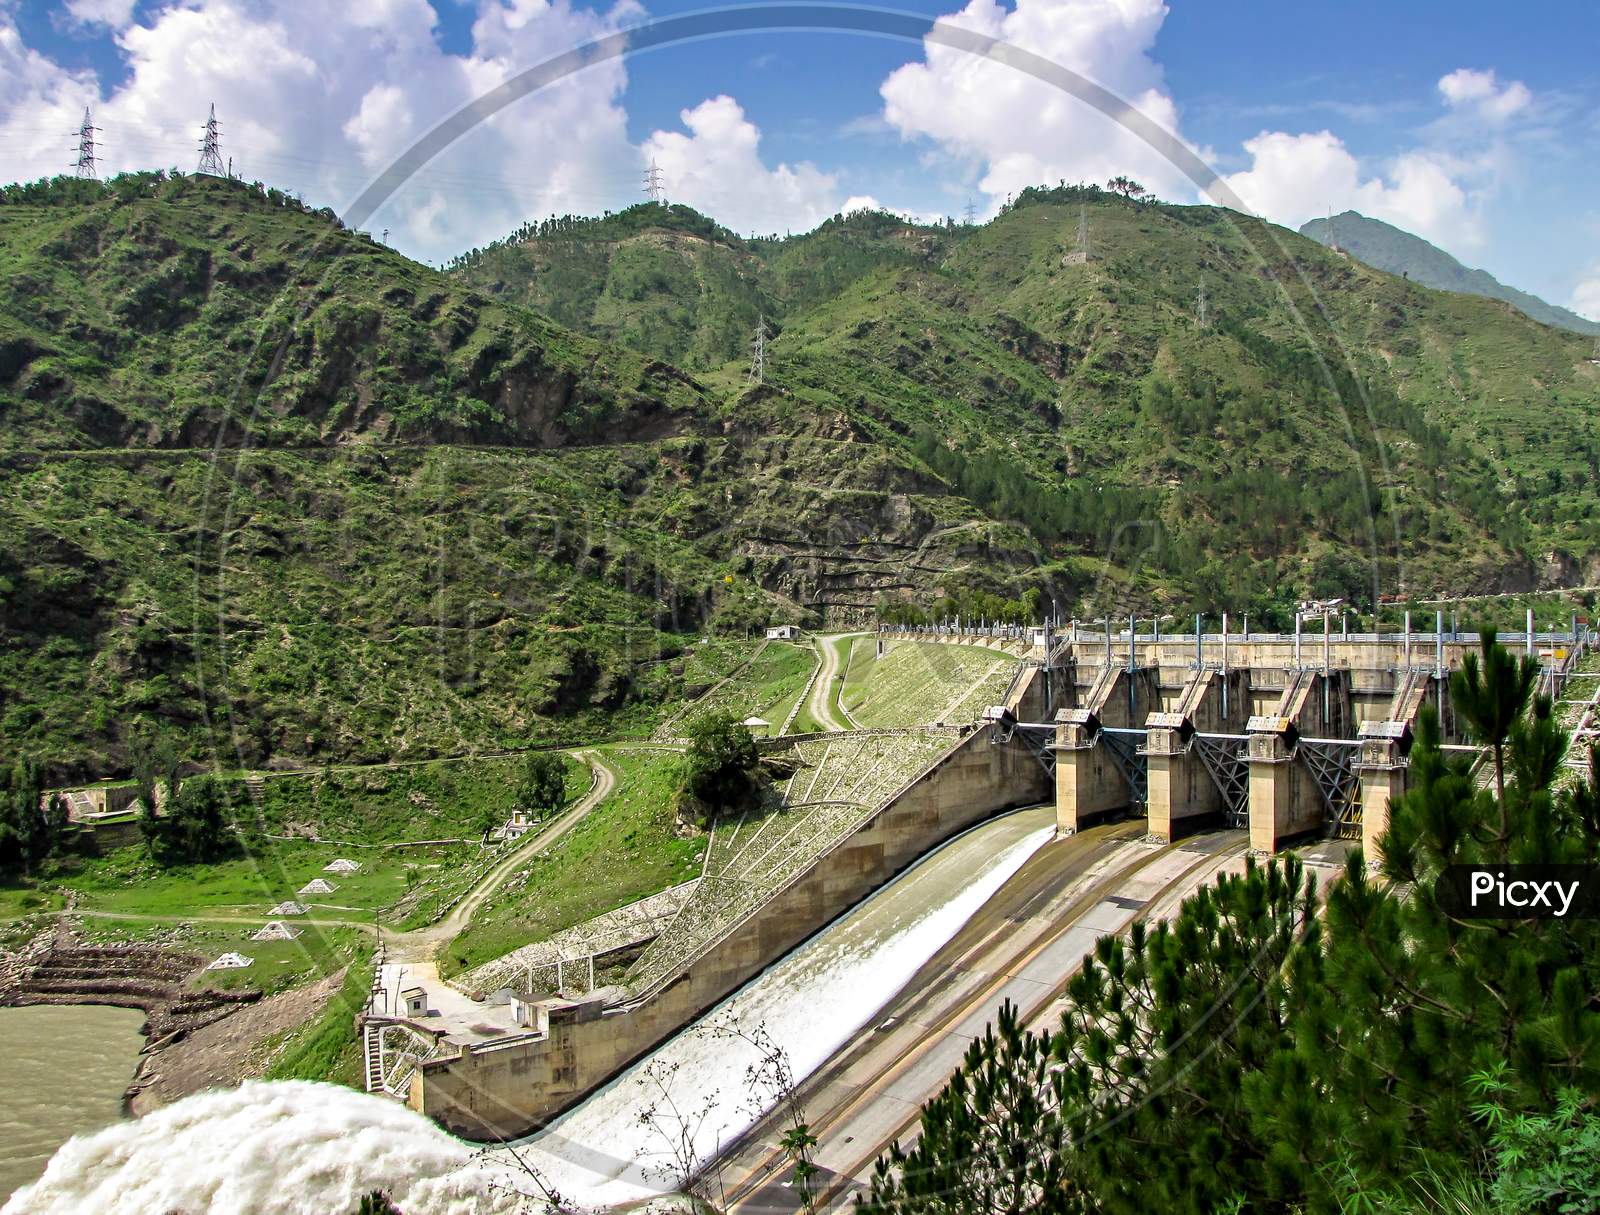 The Pandoh Dam Is An Embankment Dam On The Beas River In Mandi.